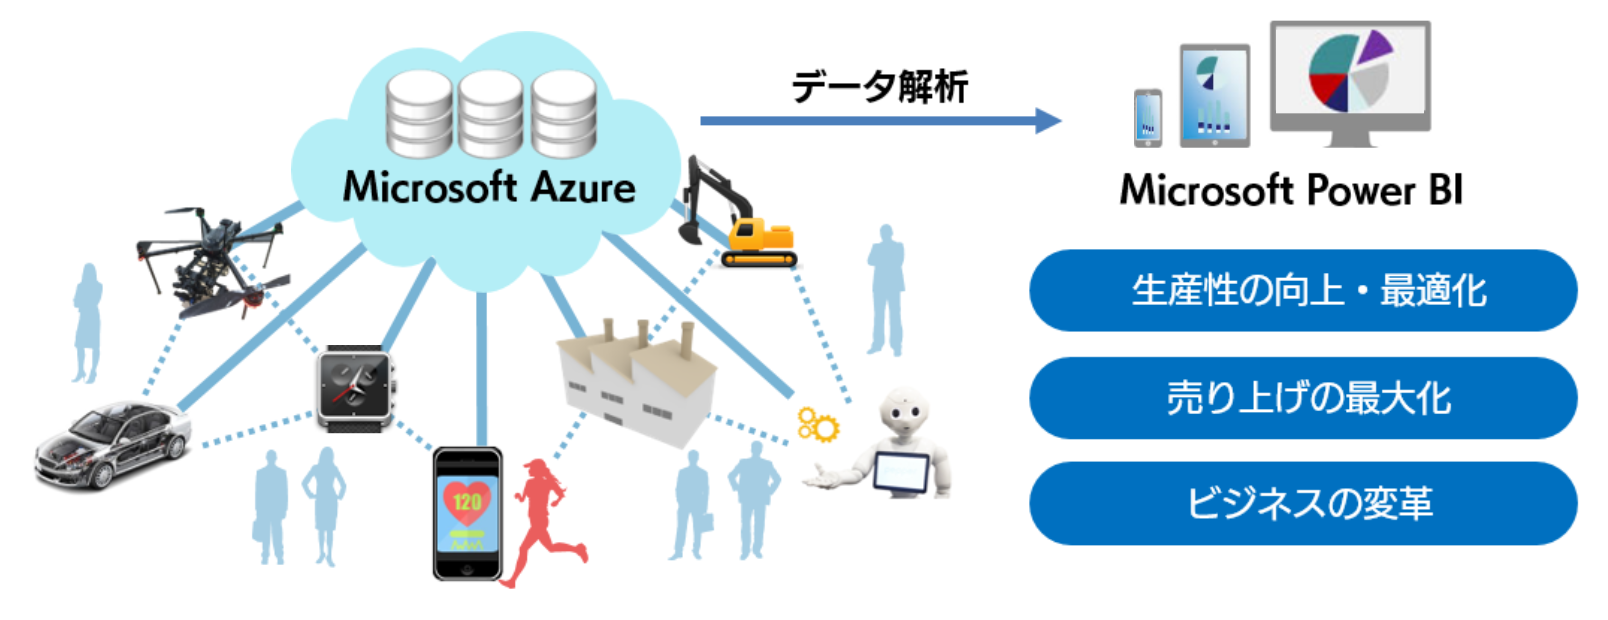 IoT Platform on Microsoft Azure のイメージ